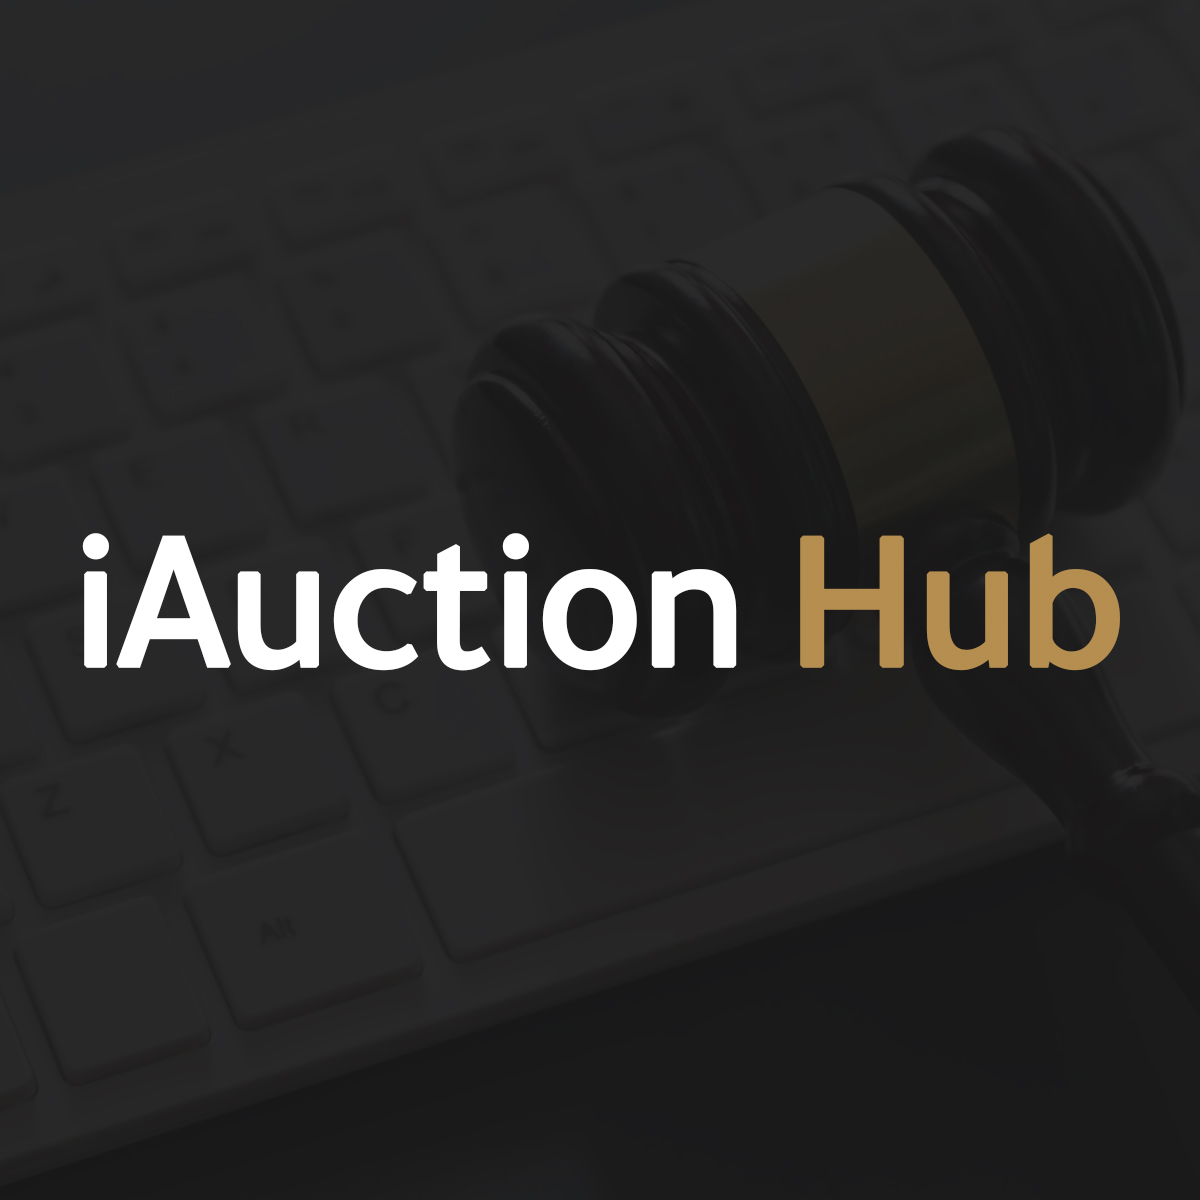 iAuction HUB